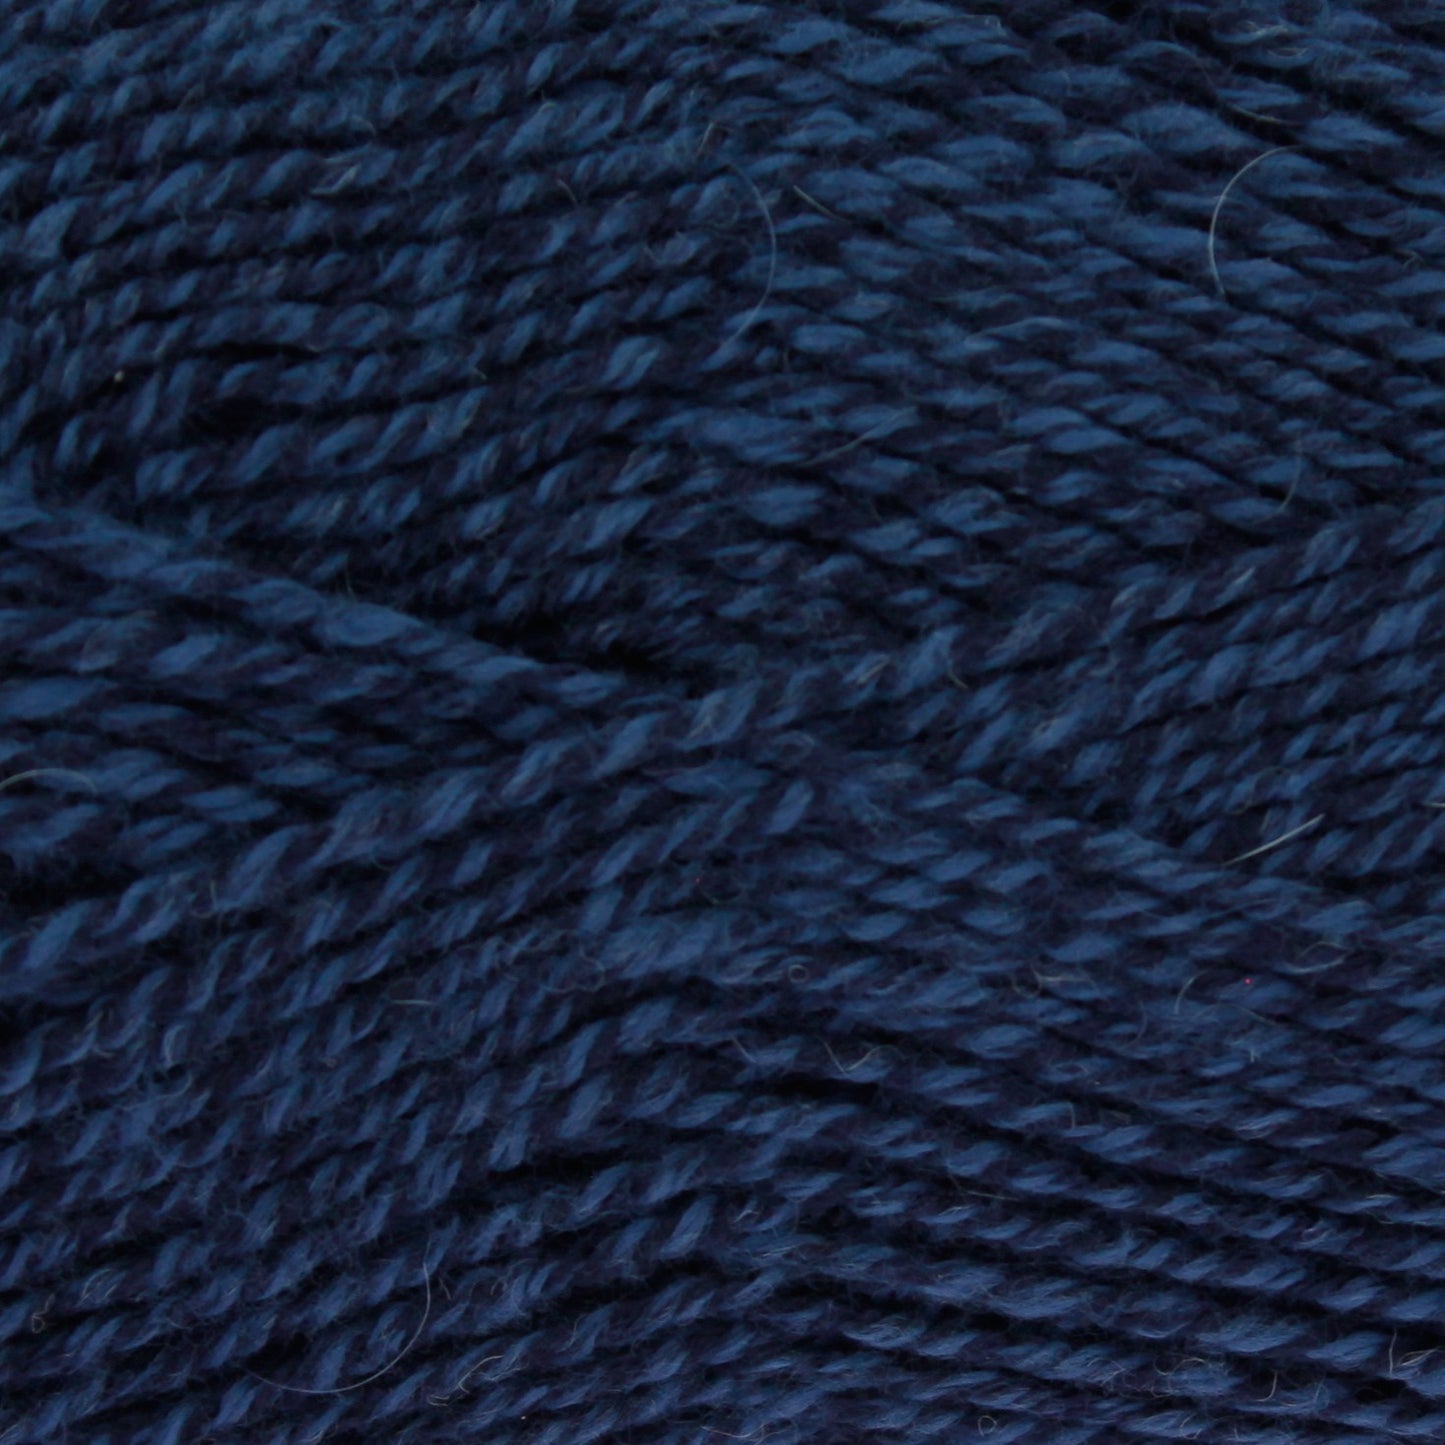 Navy blue and light blue yarn